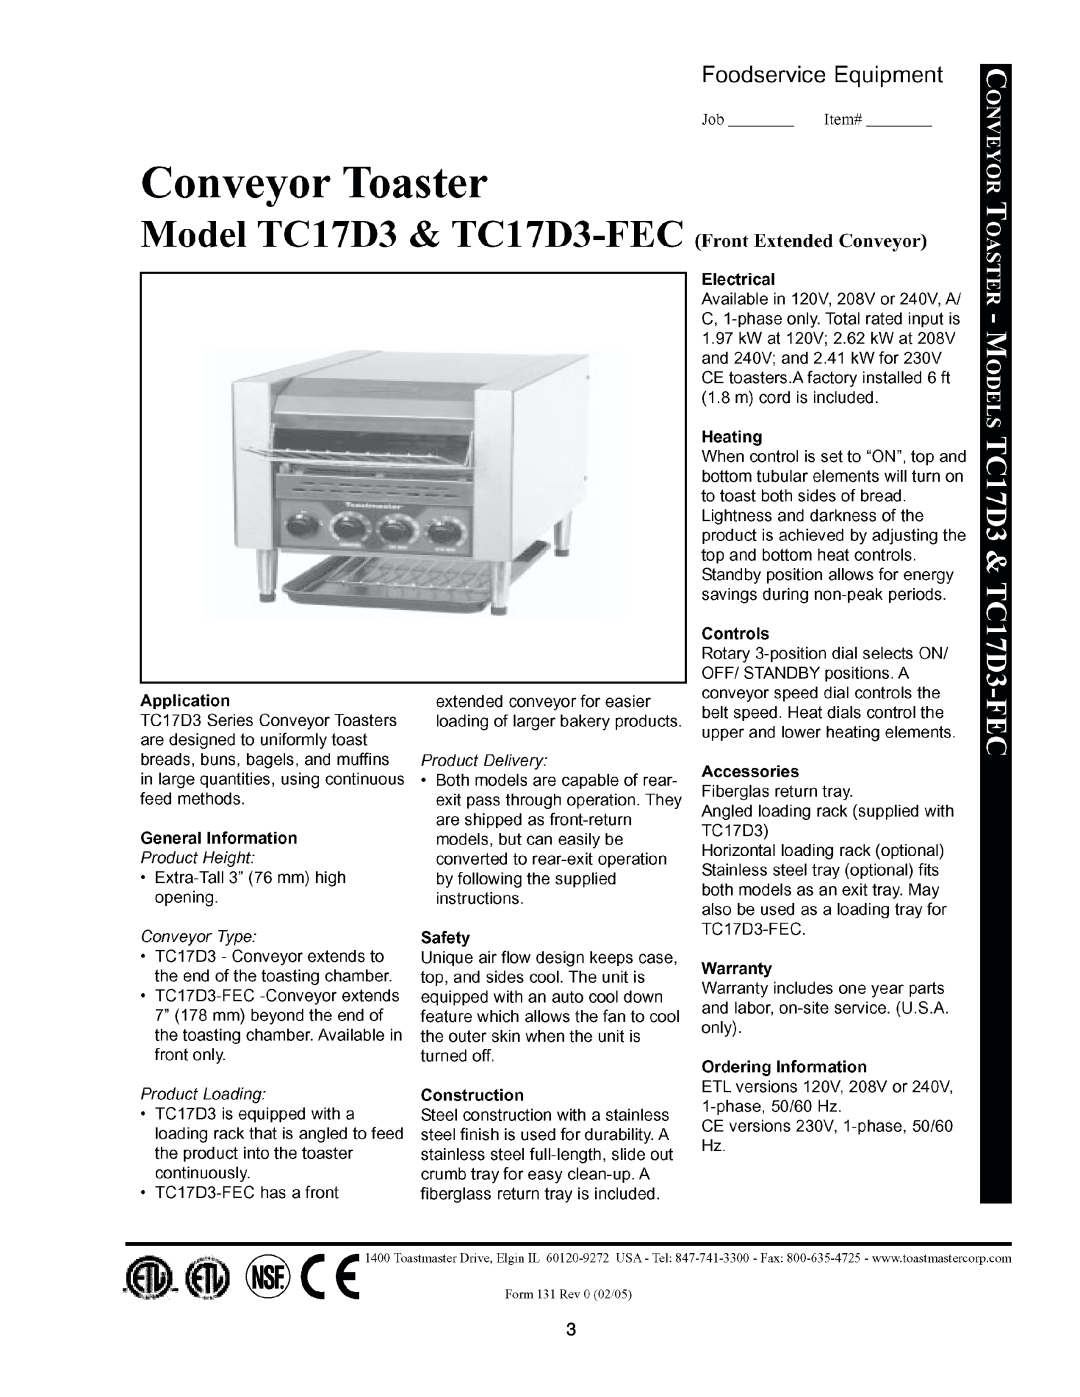 Toastmaster TC17D3 FEC 663-208V, TC21D3 FEC 663-208V, TC21D3663-208V, TC17D3 FEC 666-240V, TC17D3674-120V, TC17D3663-208V manual 